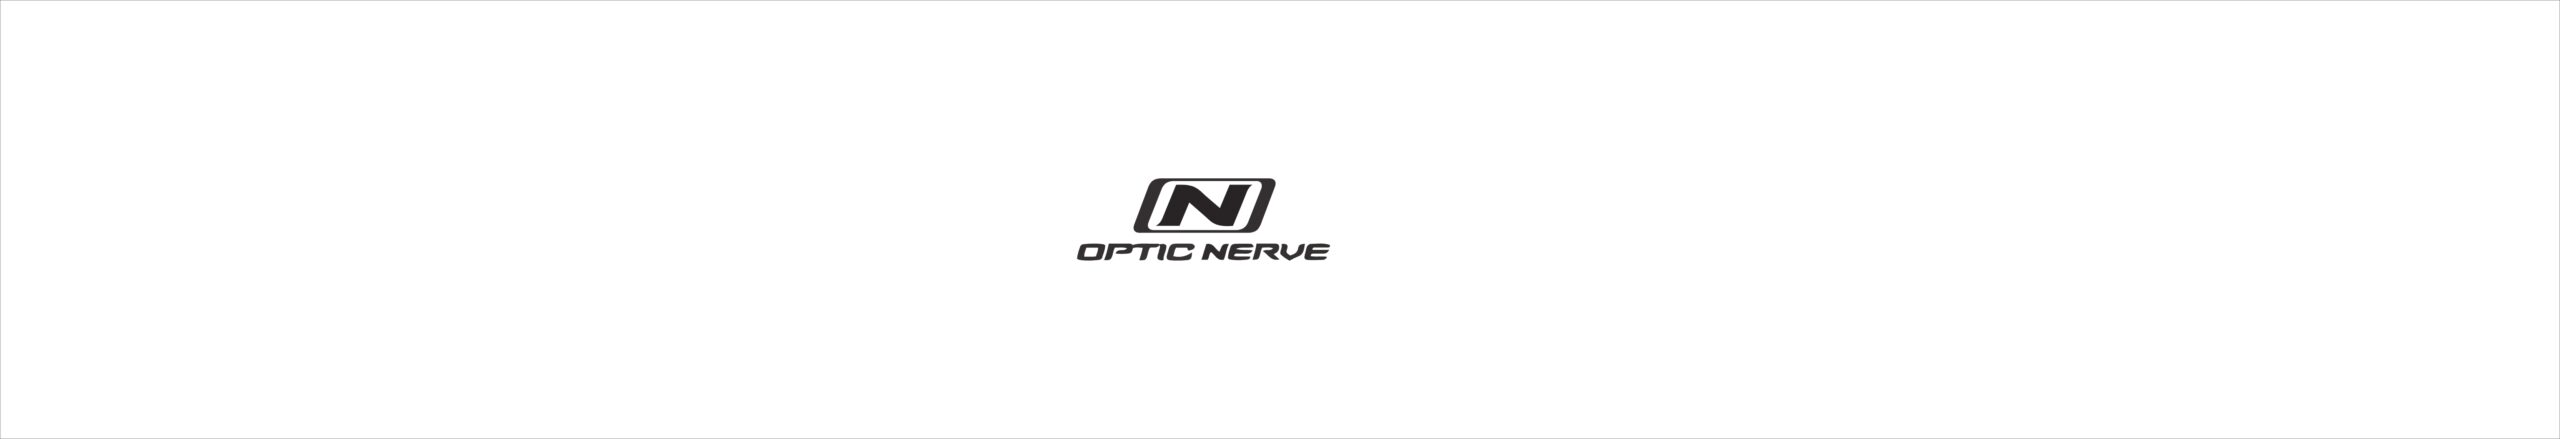 OPTIC NERVE